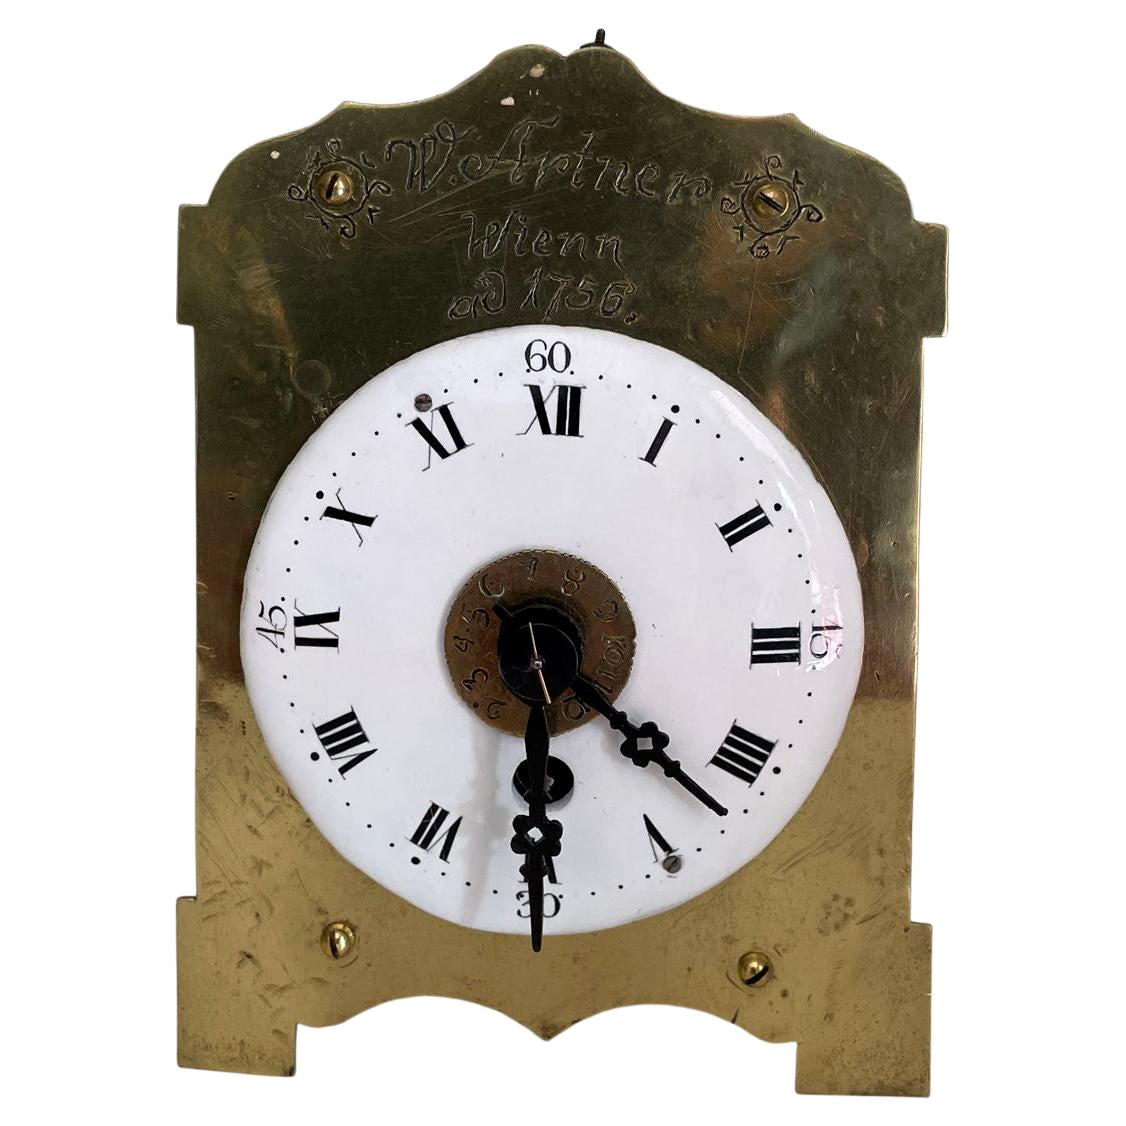 Austrian Zappler Alarm Clock, W Artner, Wienn, 18th Century